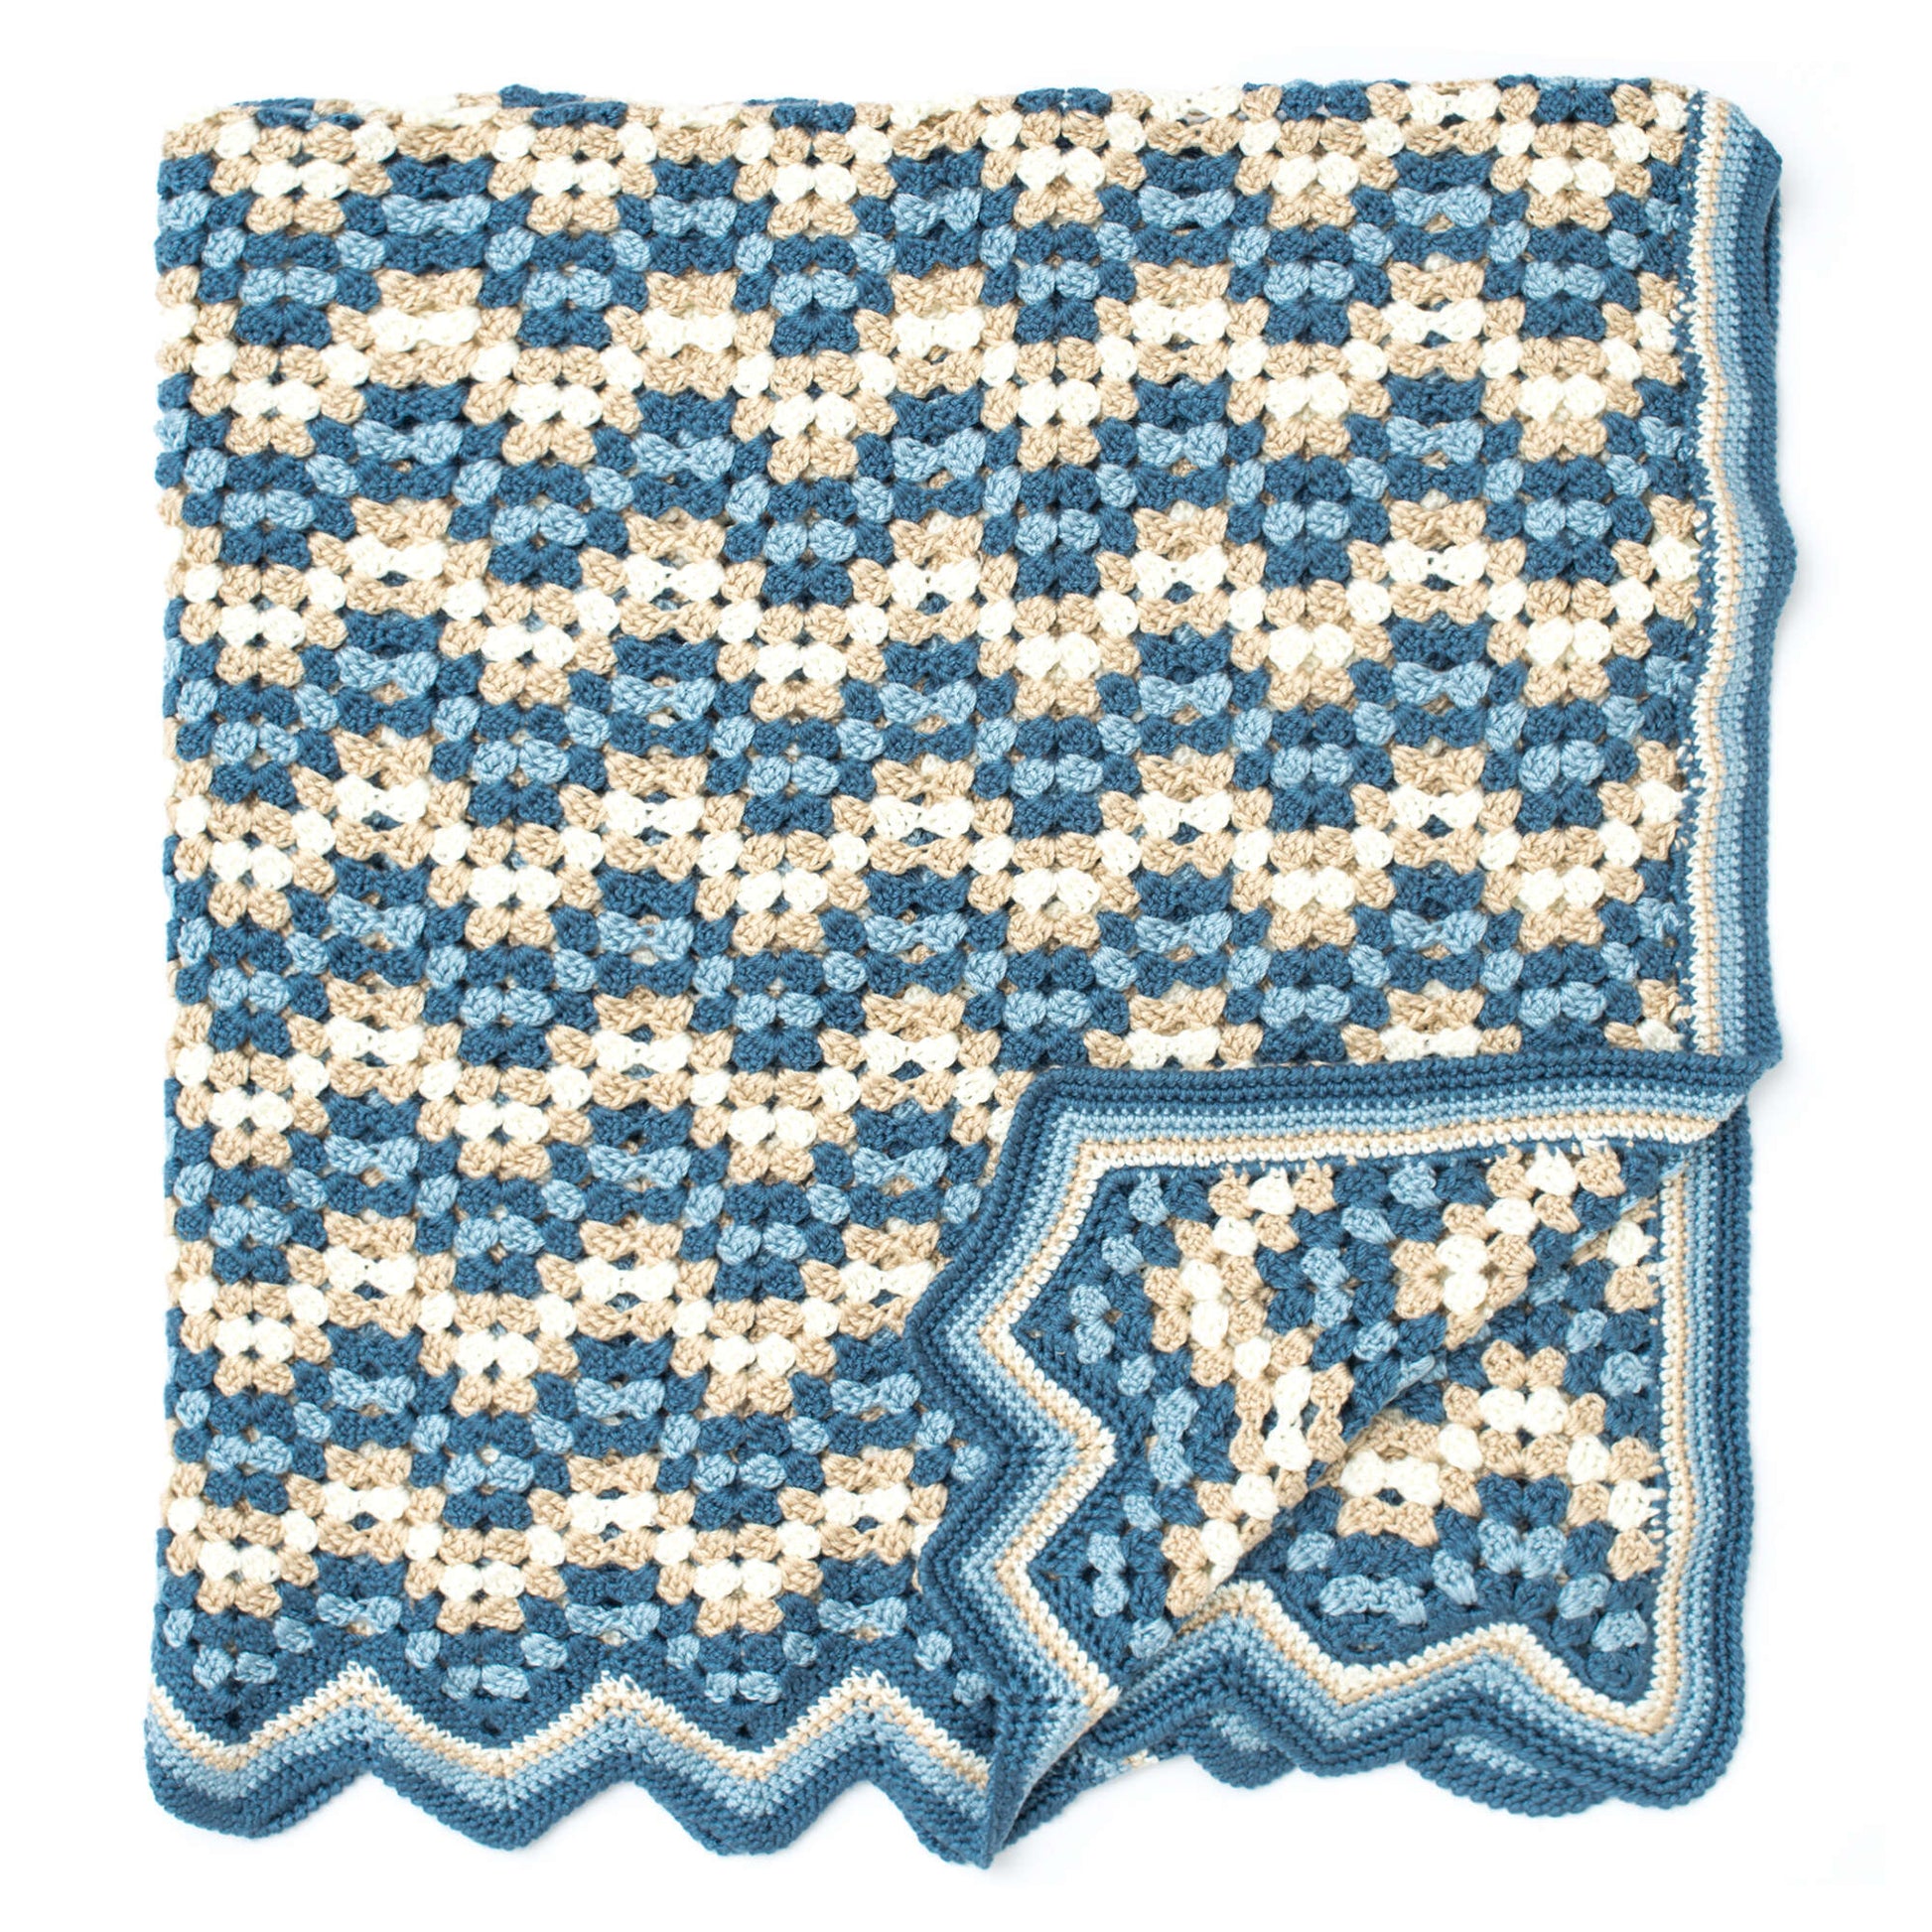 Free Caron Granny Goes Ripple Crochet Pattern